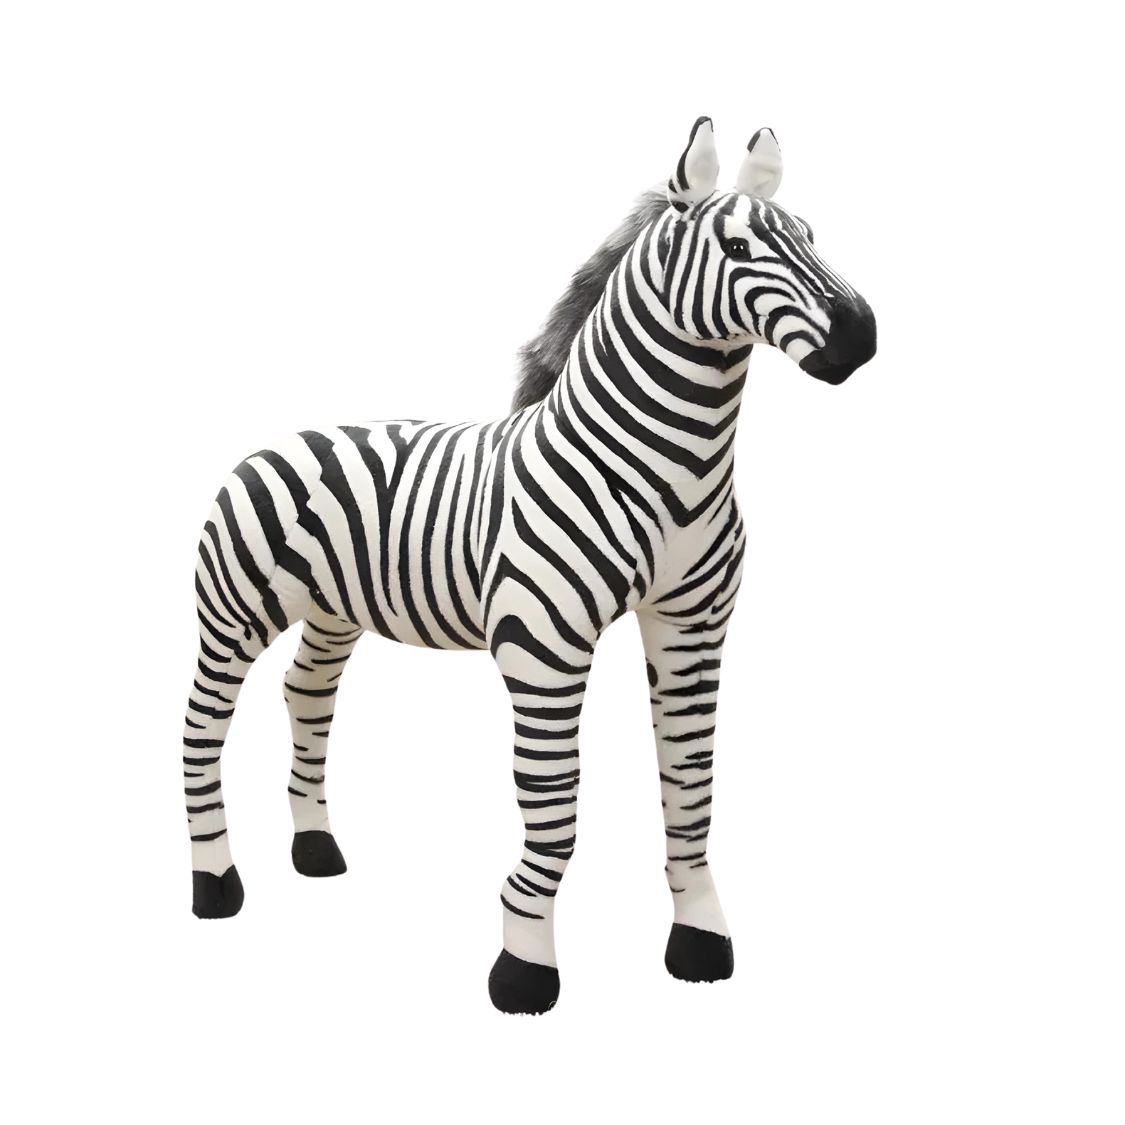 Zebra Safari Stuffed Animal